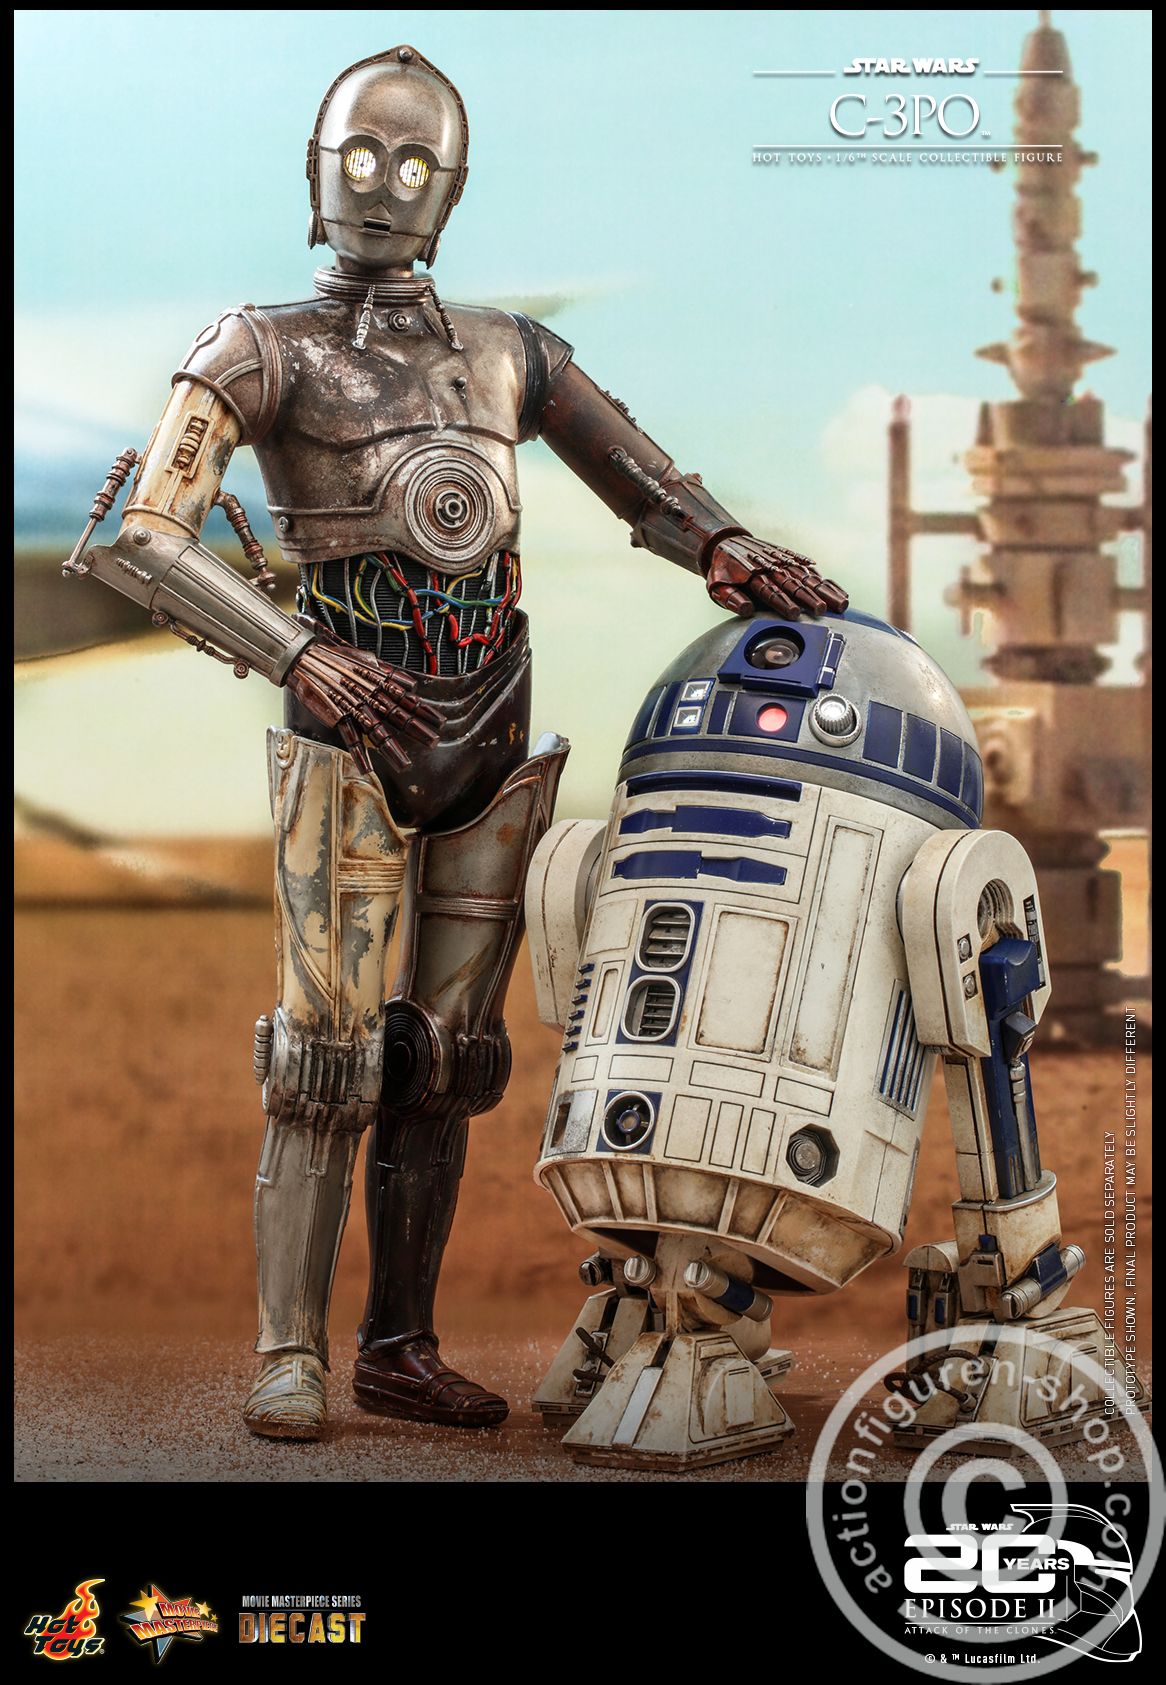 Star Wars Episode II: Attack of the Clones - C-3PO 